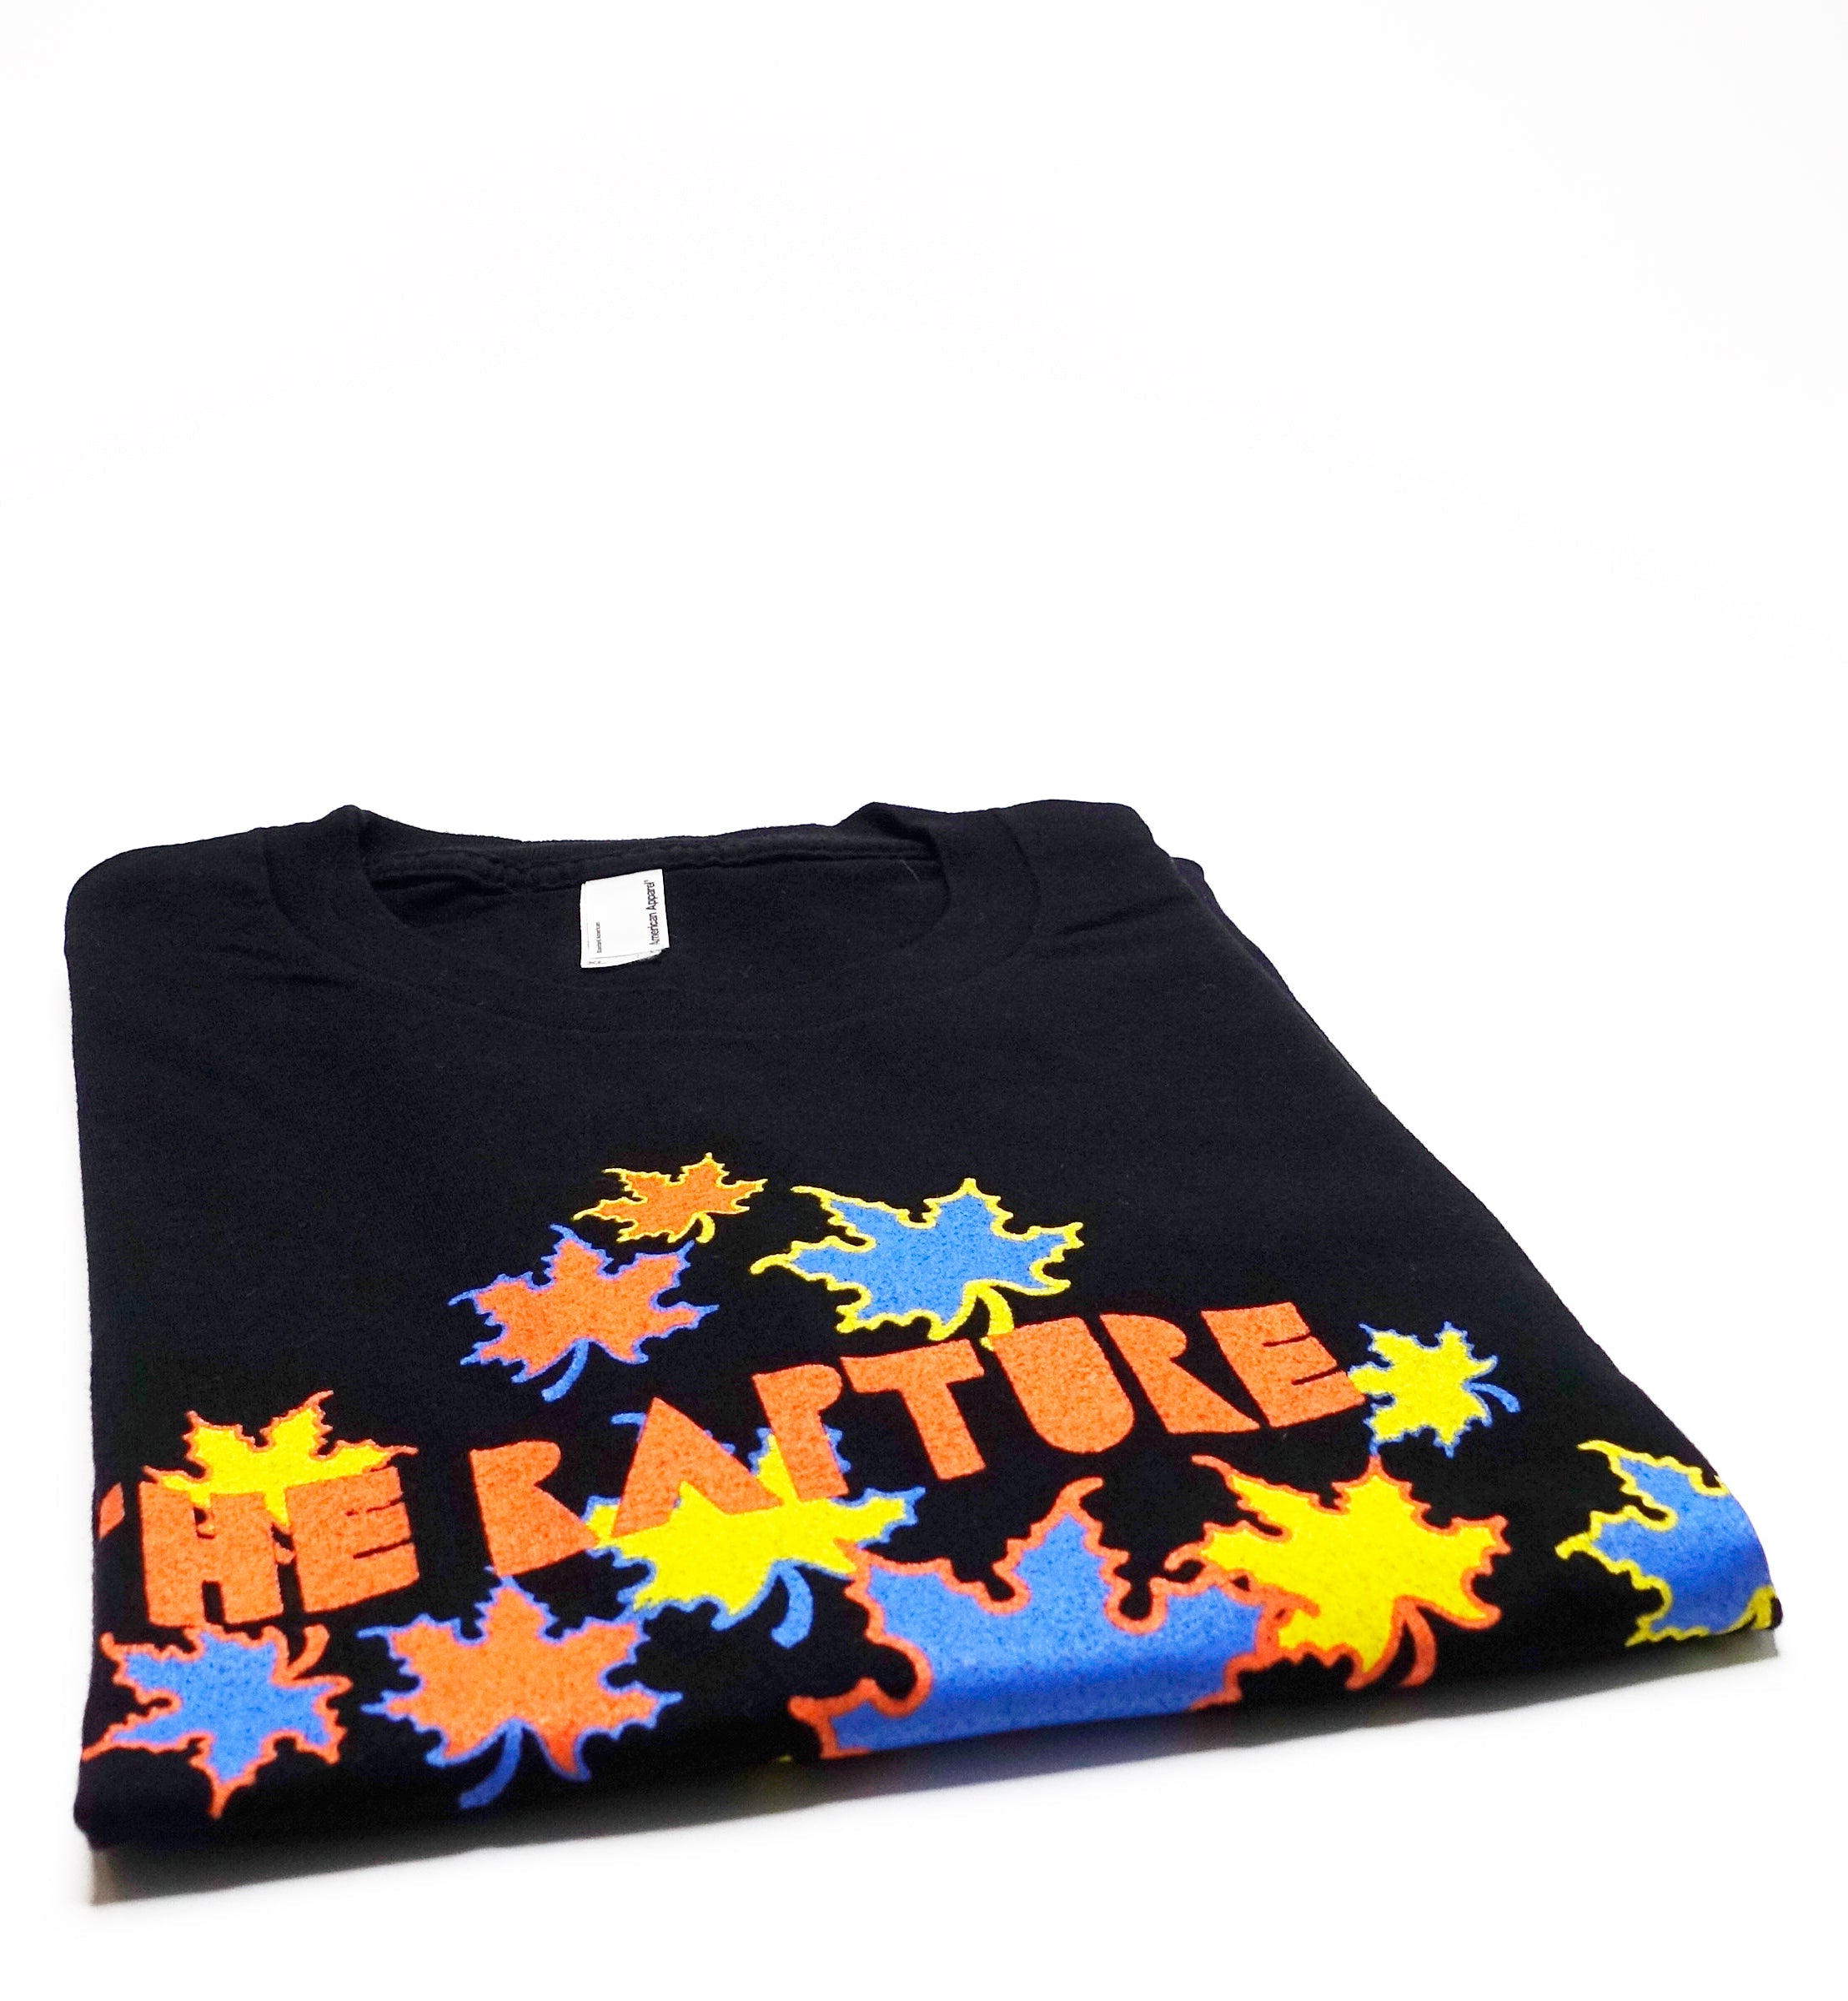 the Rapture - Maple Leaves Tour Shirt Size XL